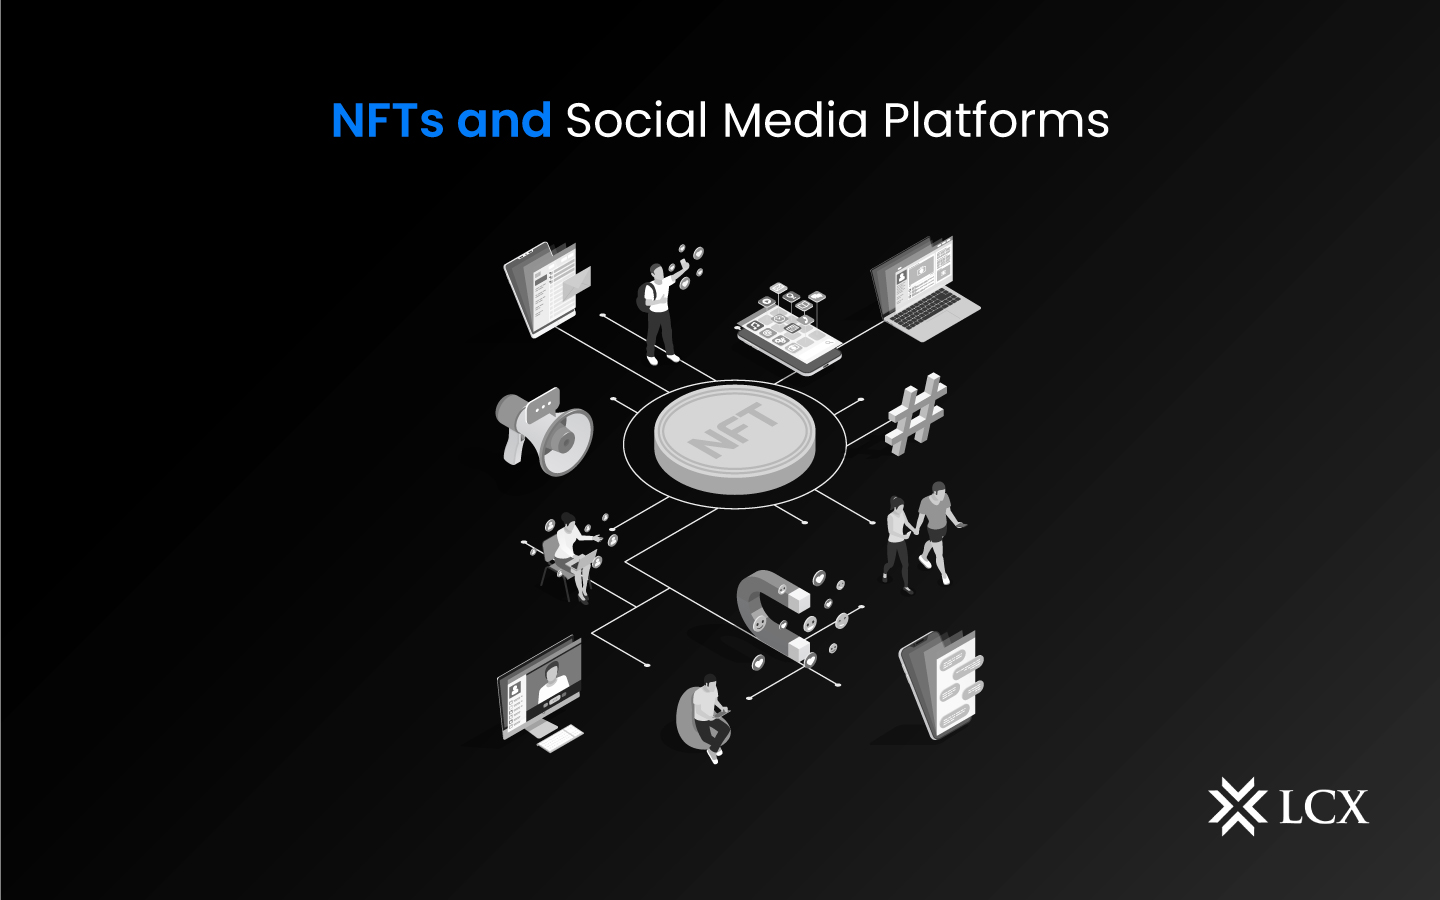 The role of NFTs on social media platforms